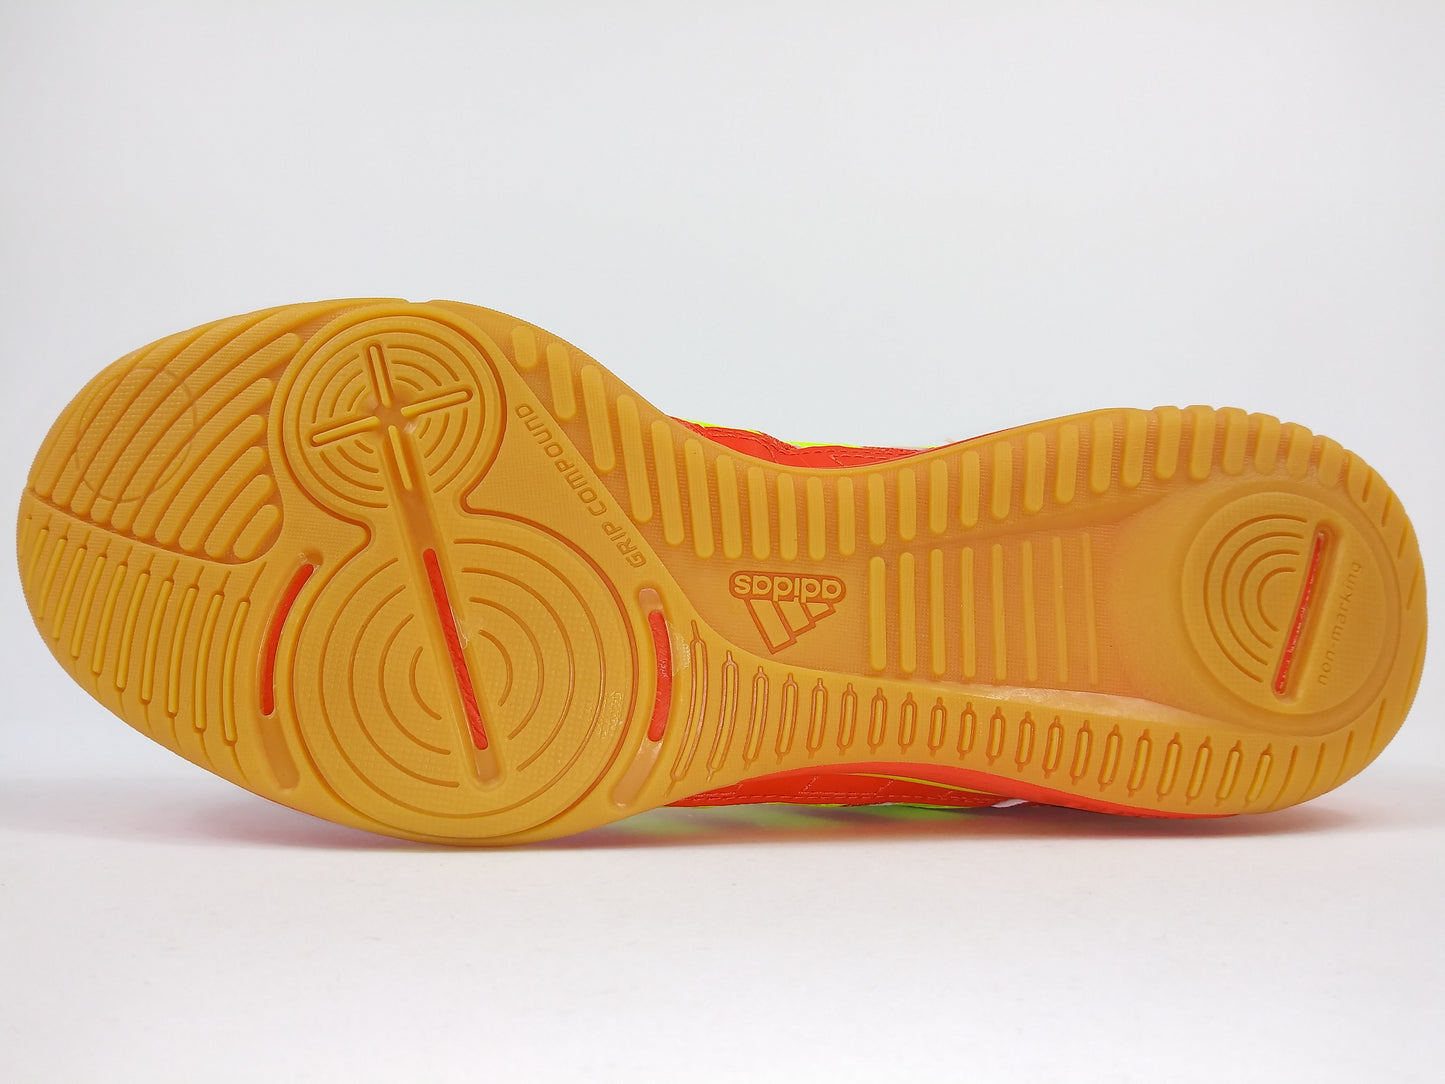 Adidas TopSala X Orange Yellow Indoor Shoes